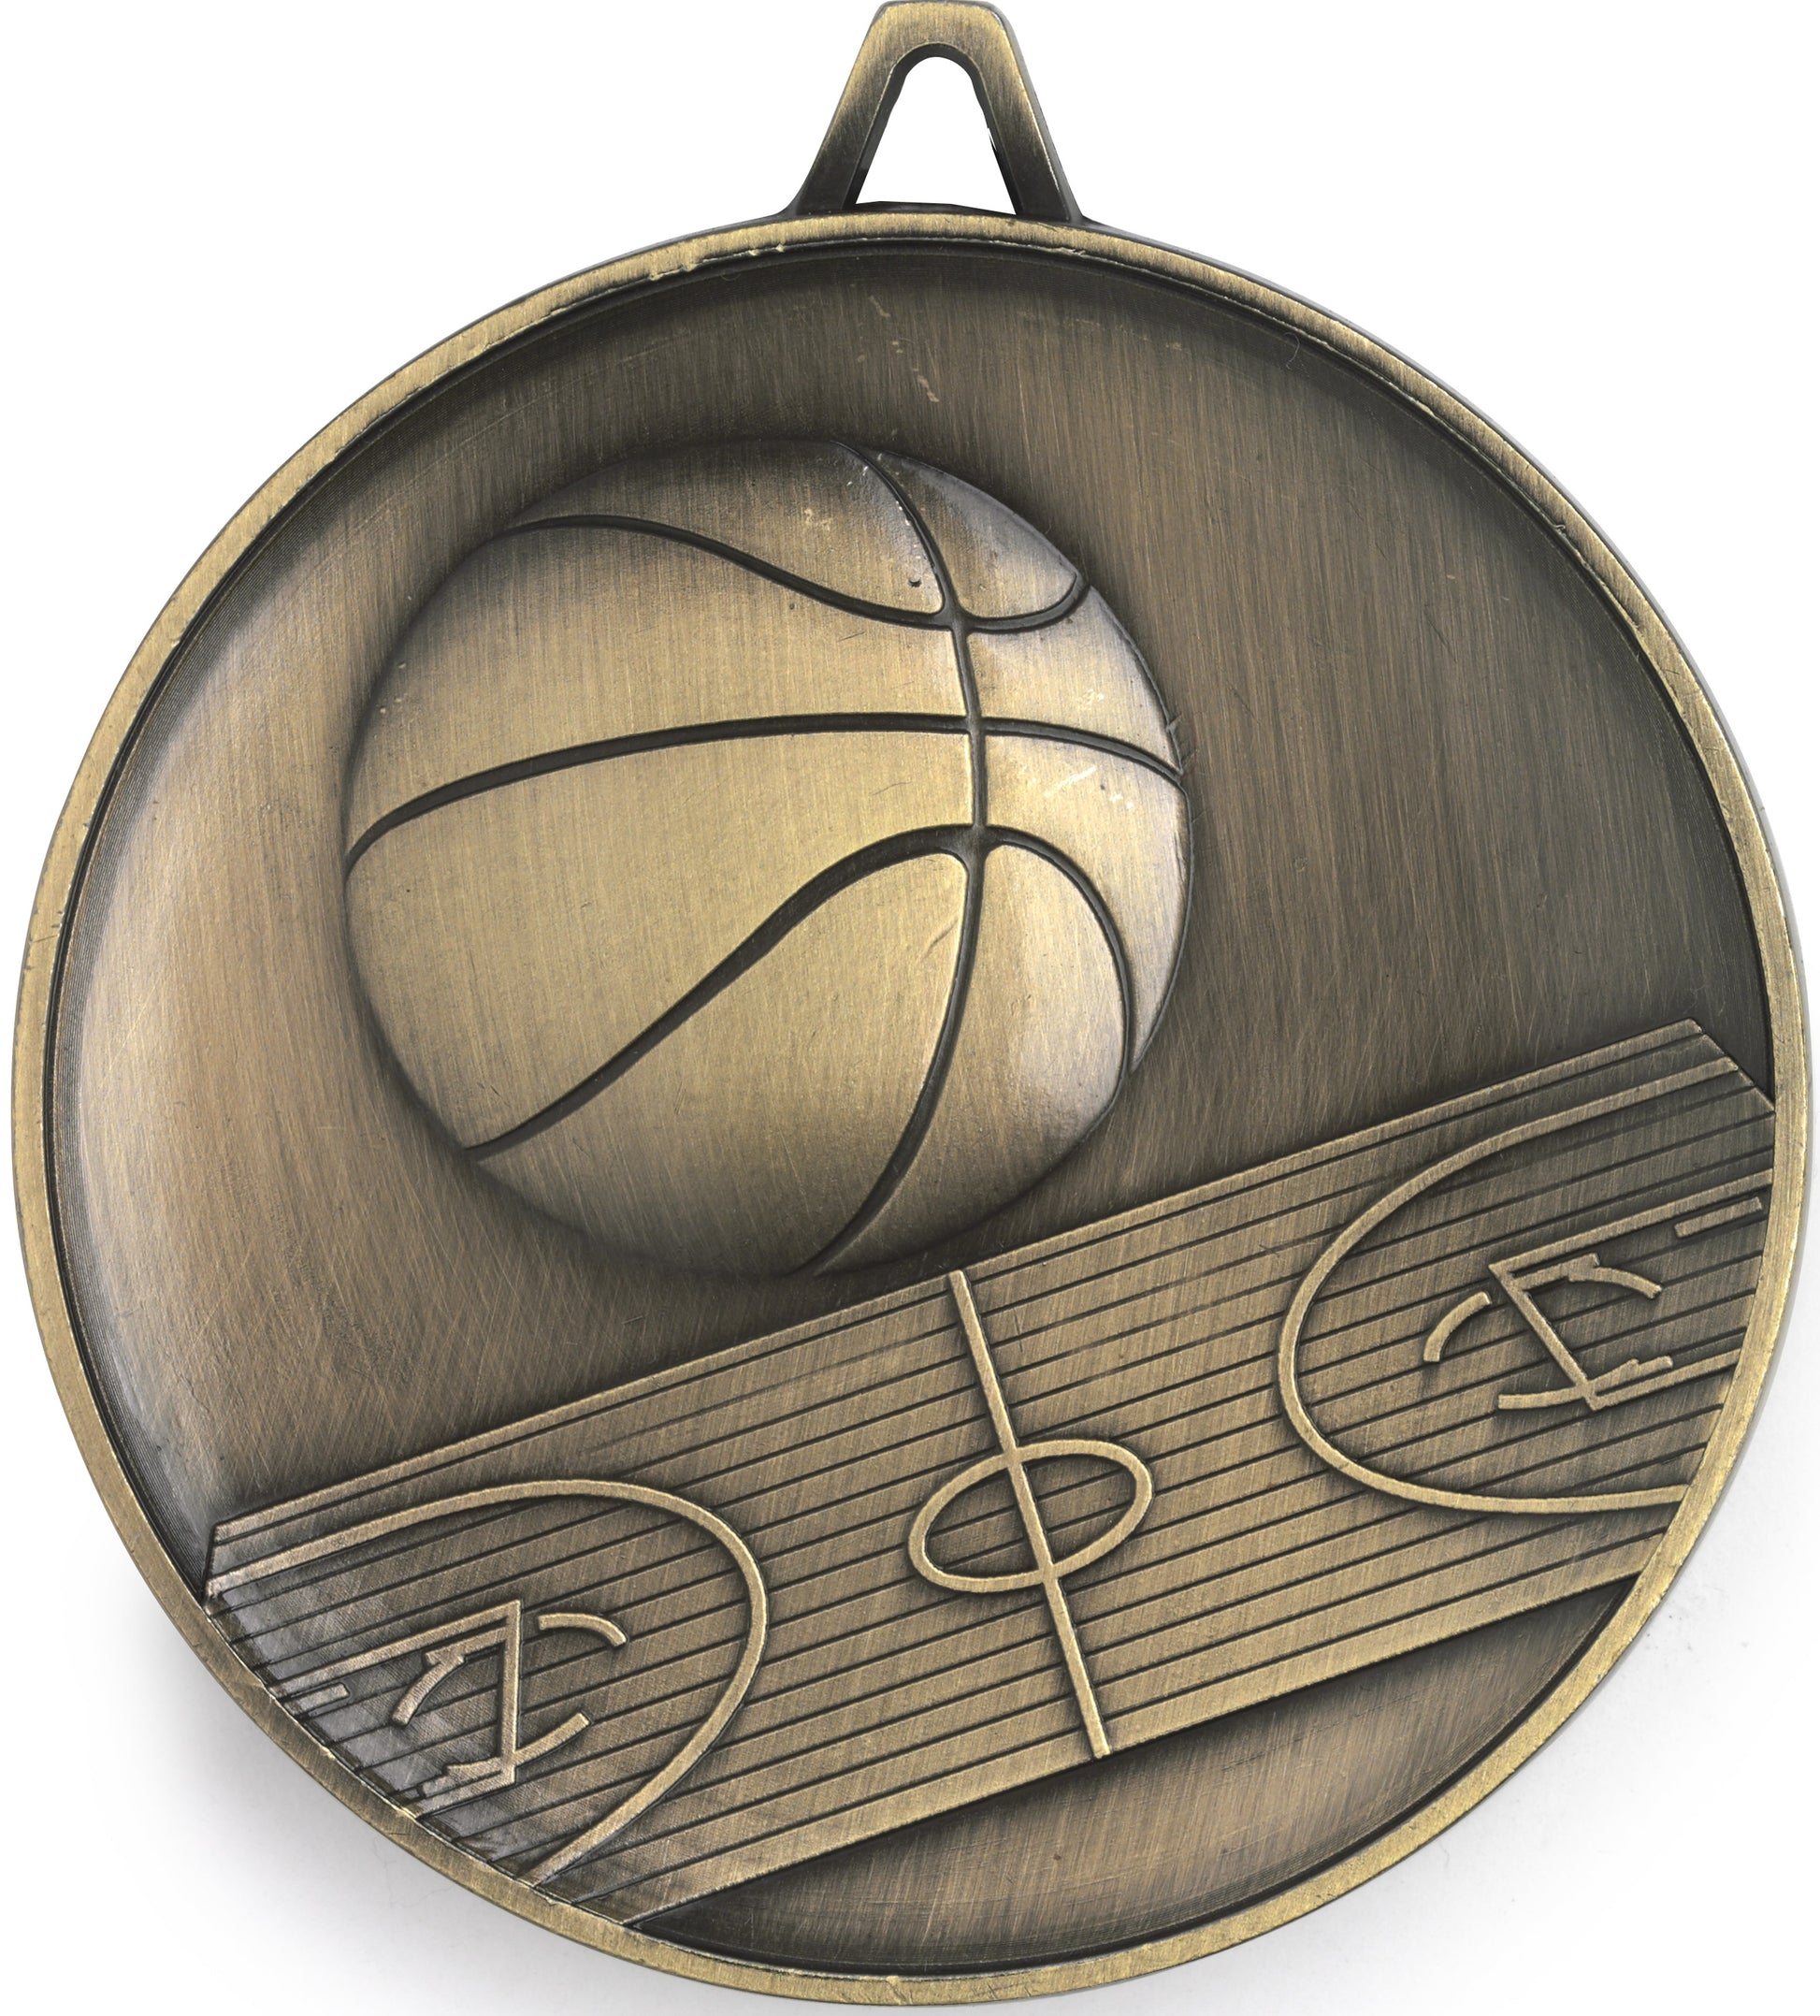 M9307 Basketball Medal